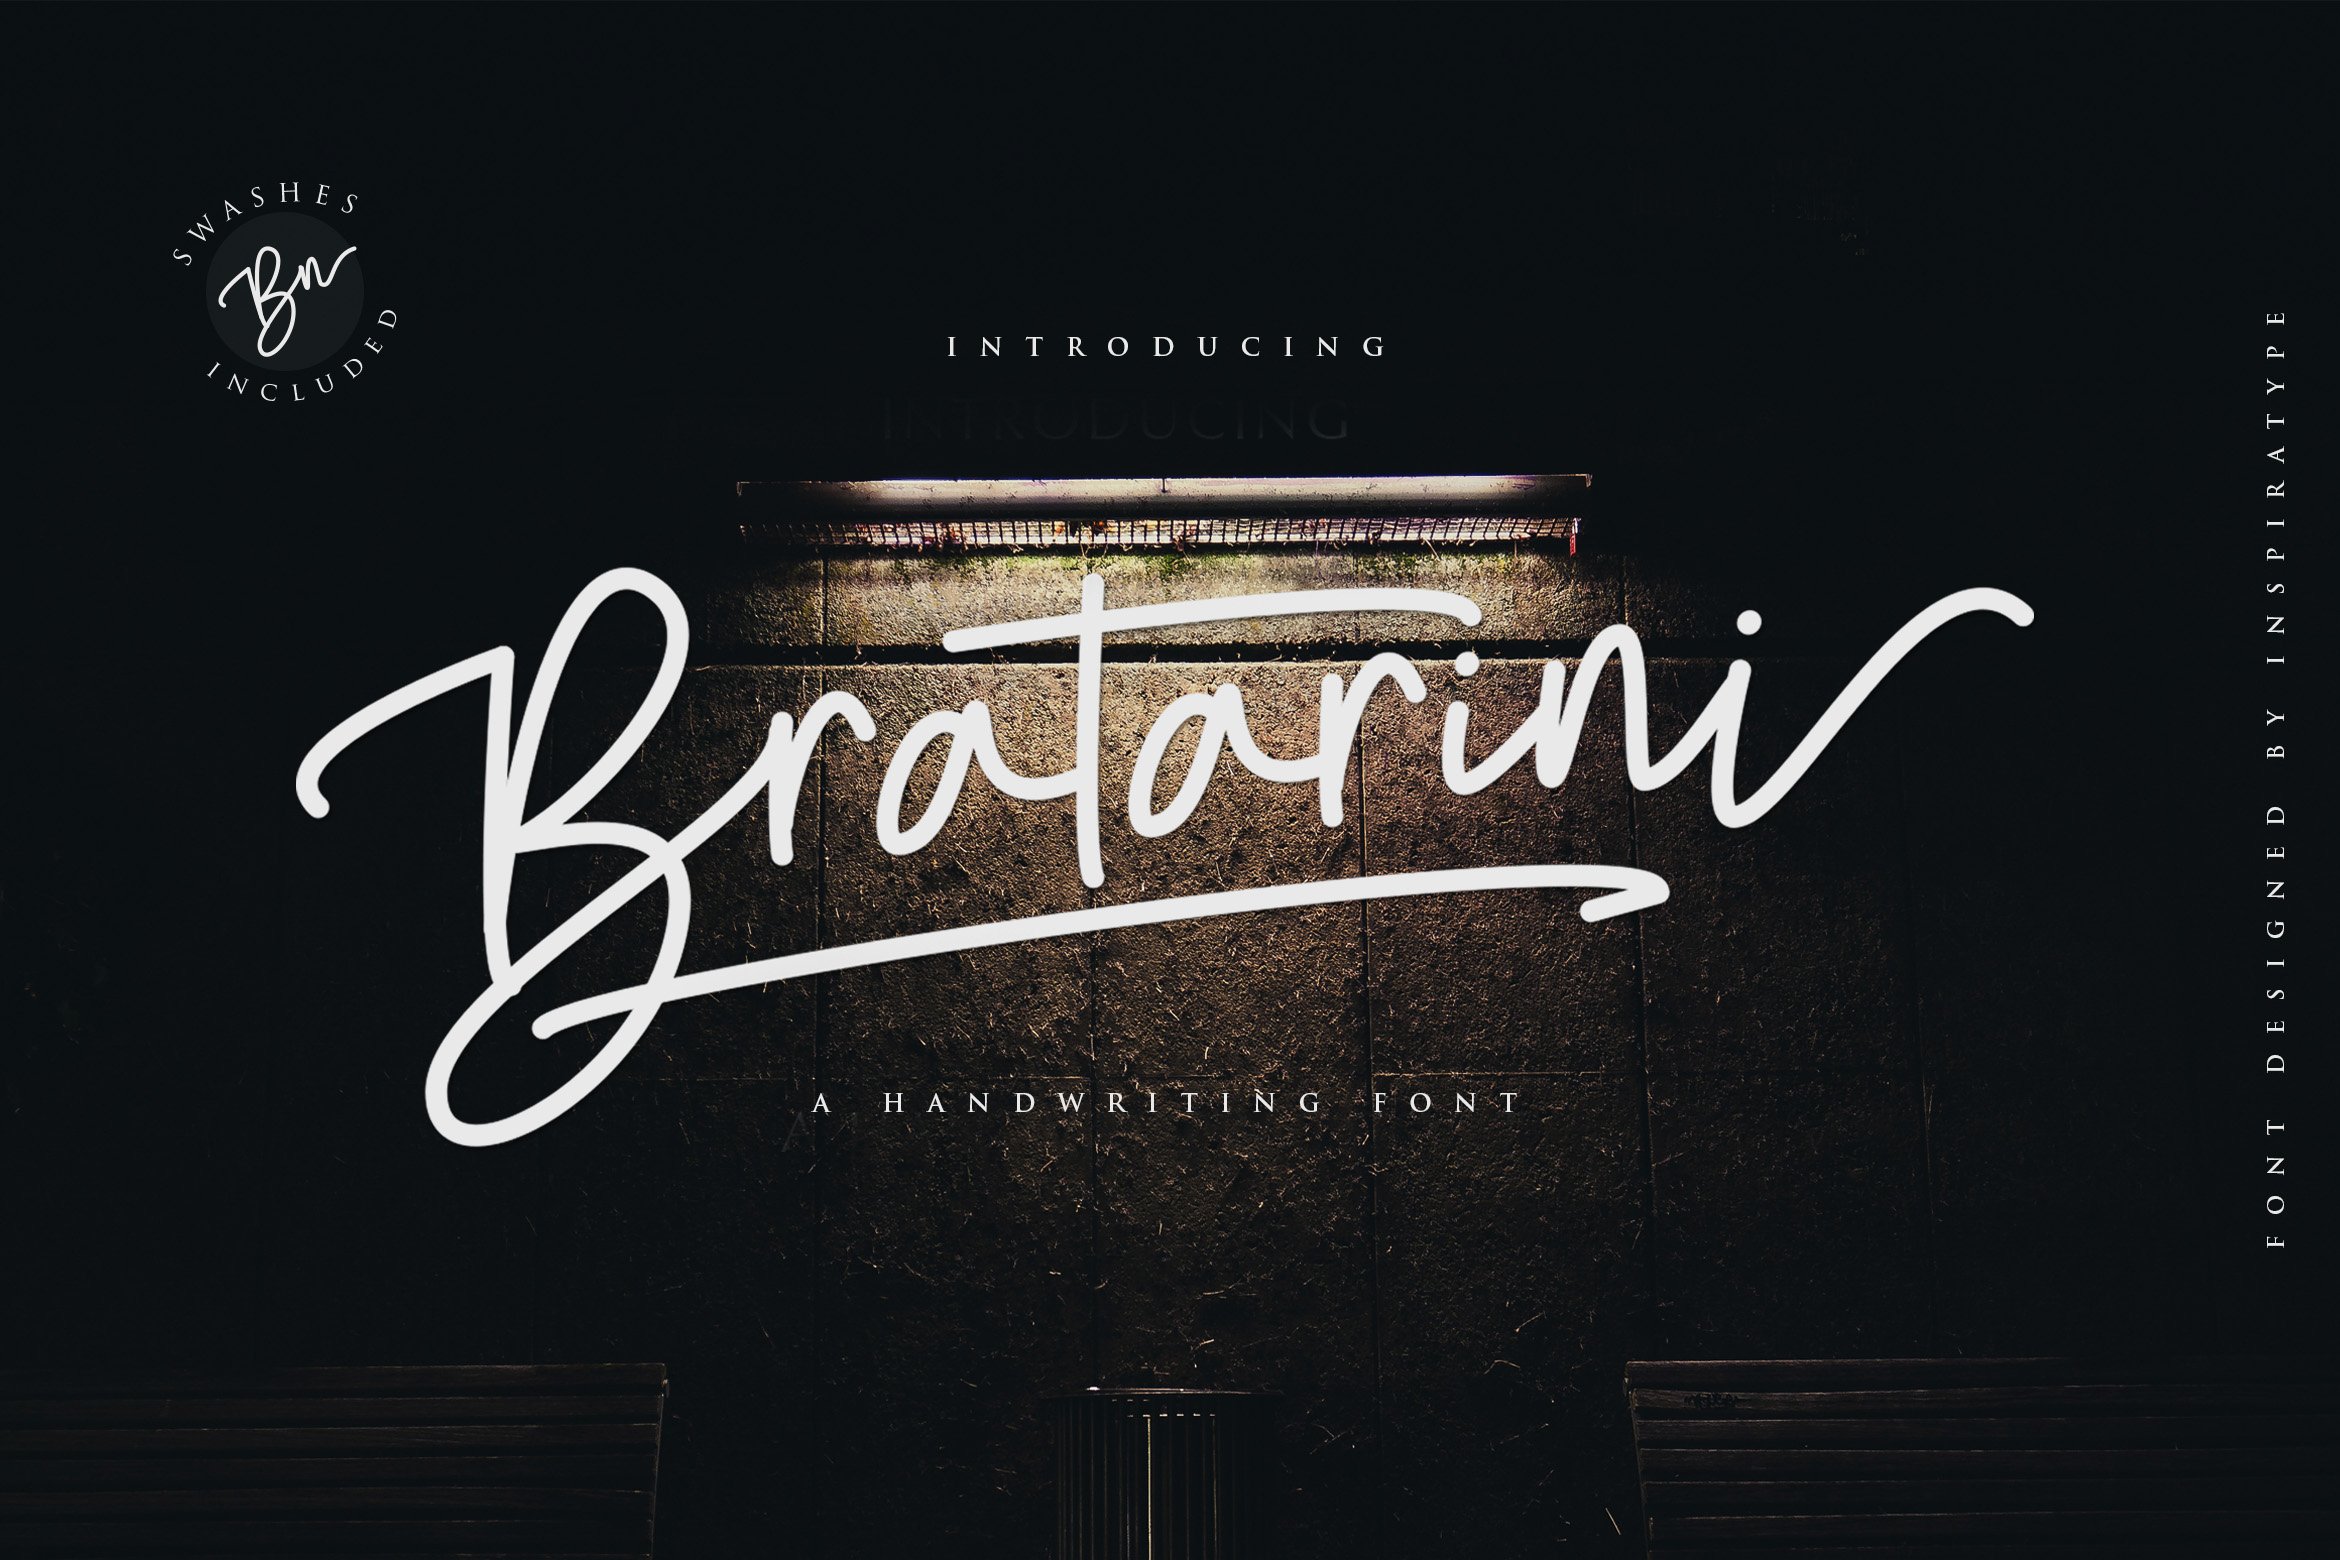 Bratarini - a Handwriting Font cover image.